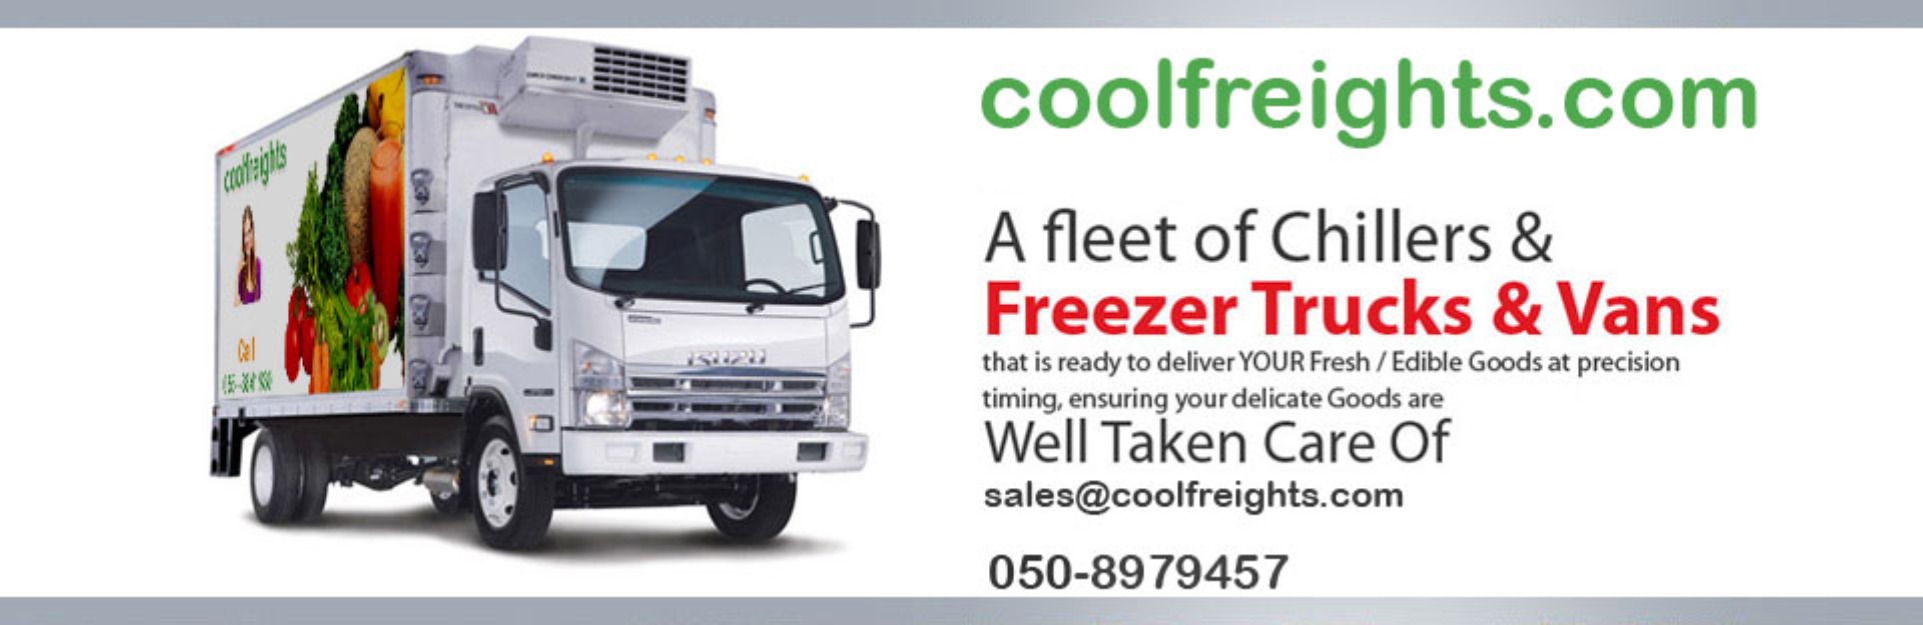 freezer truck for rent